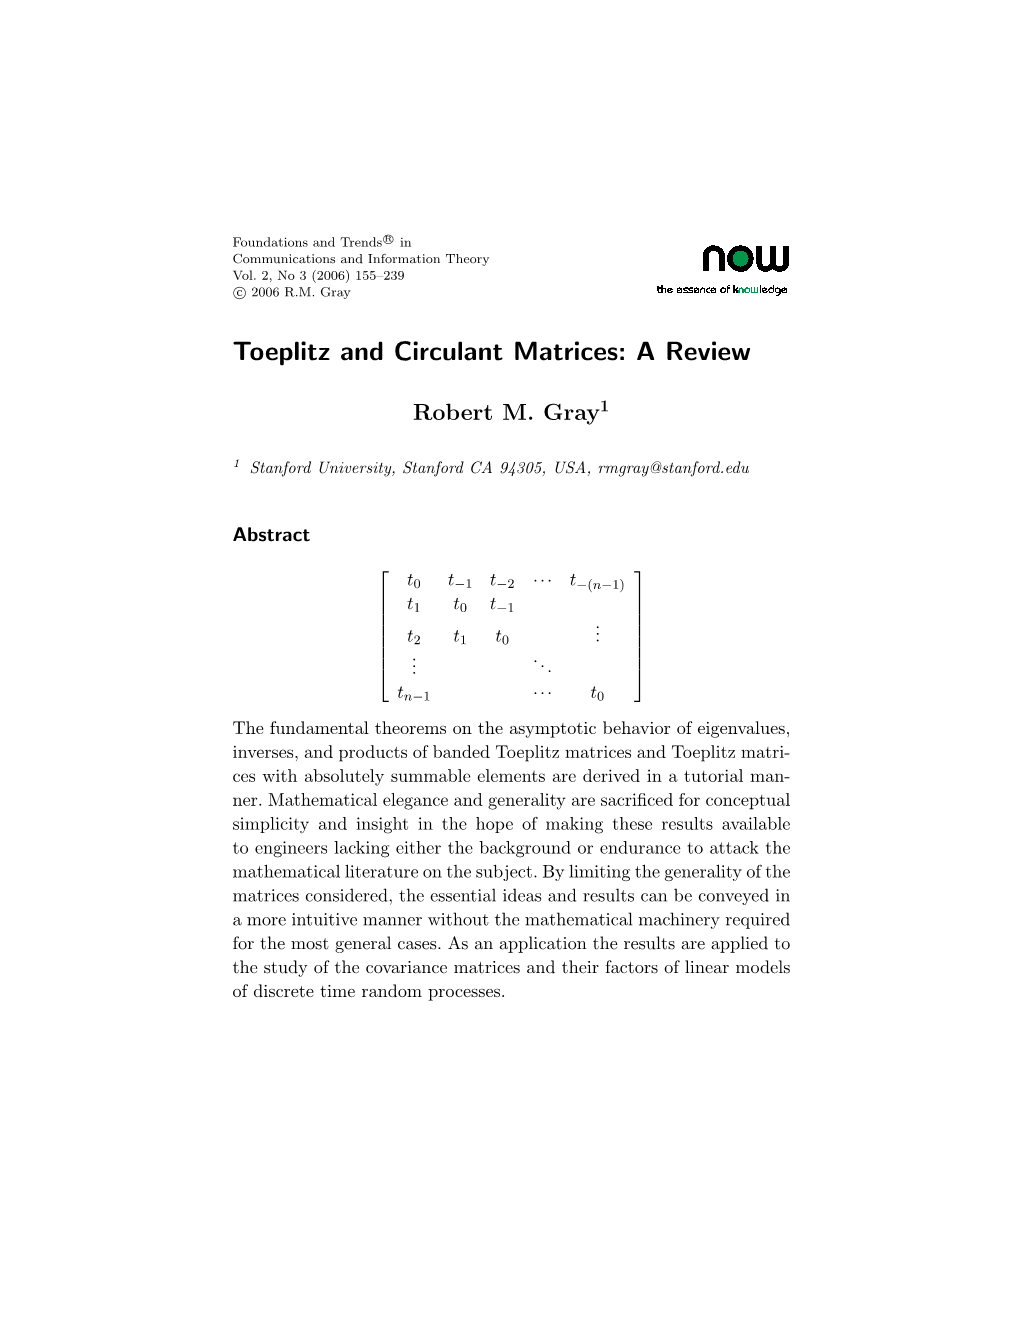 Toeplitz and Circulant Matrices: a Review